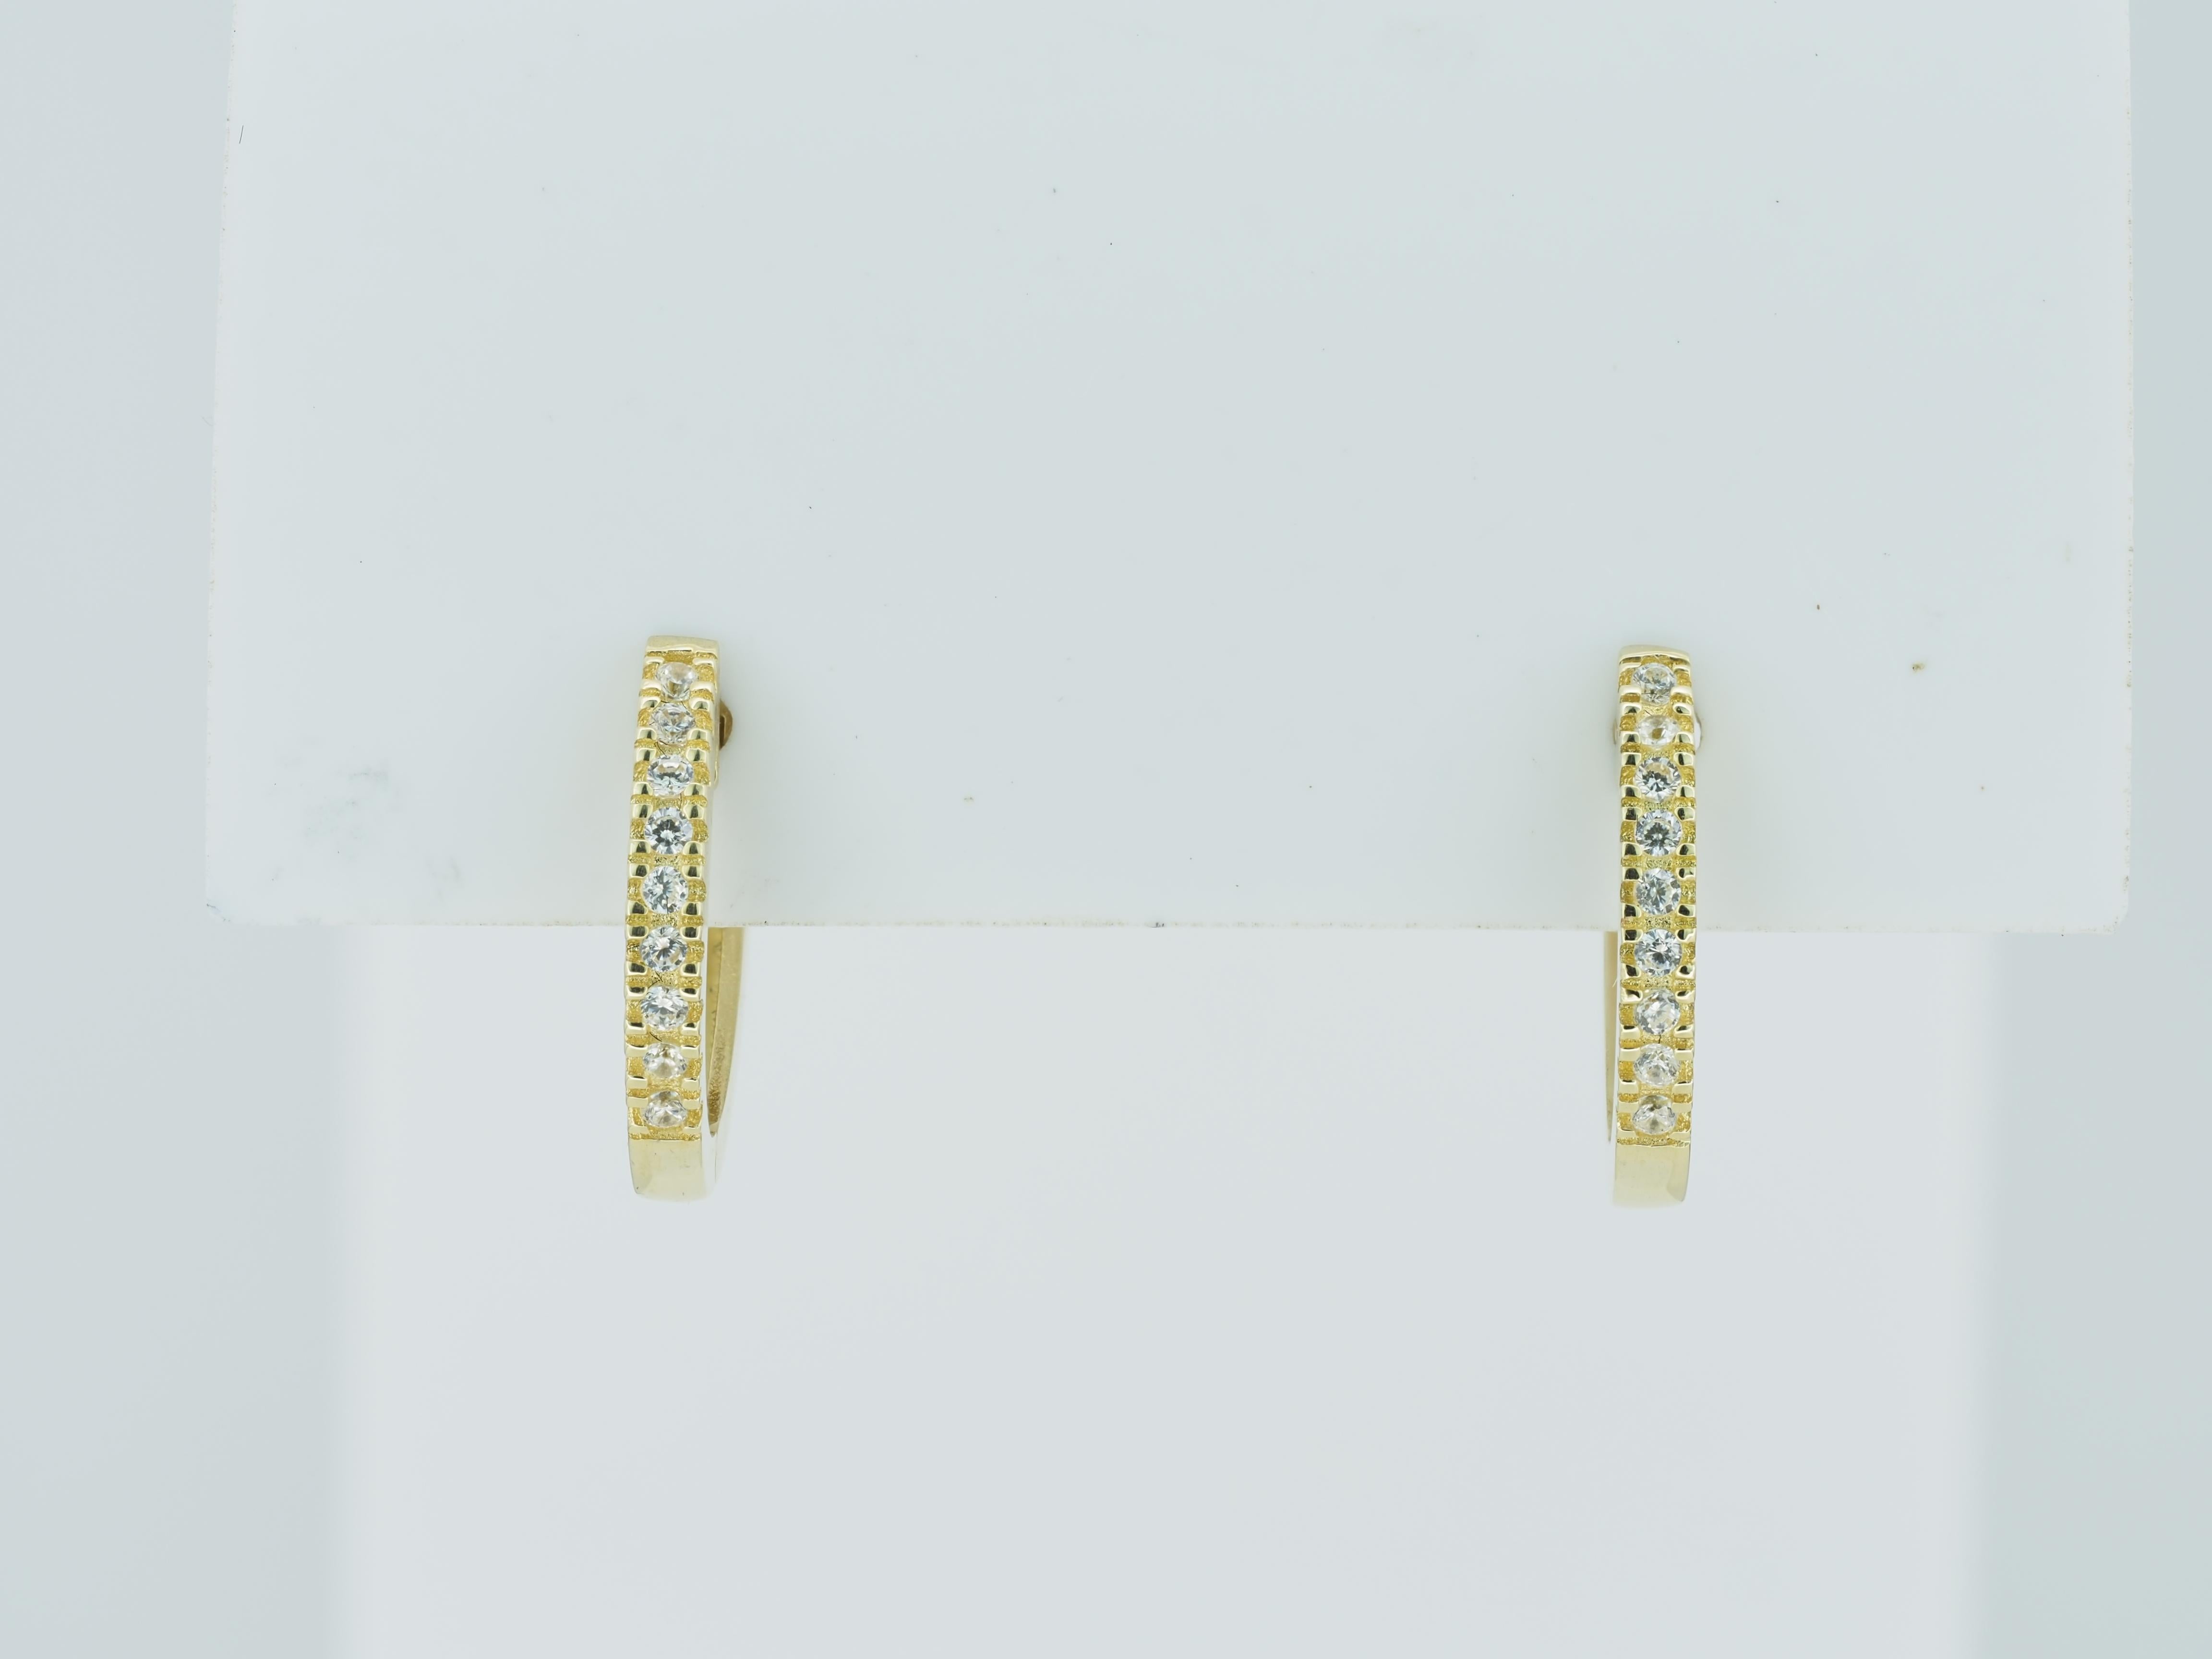 Round Cut Tiny Huggie Hoop Earrings in 14 Karat Yellow Gold